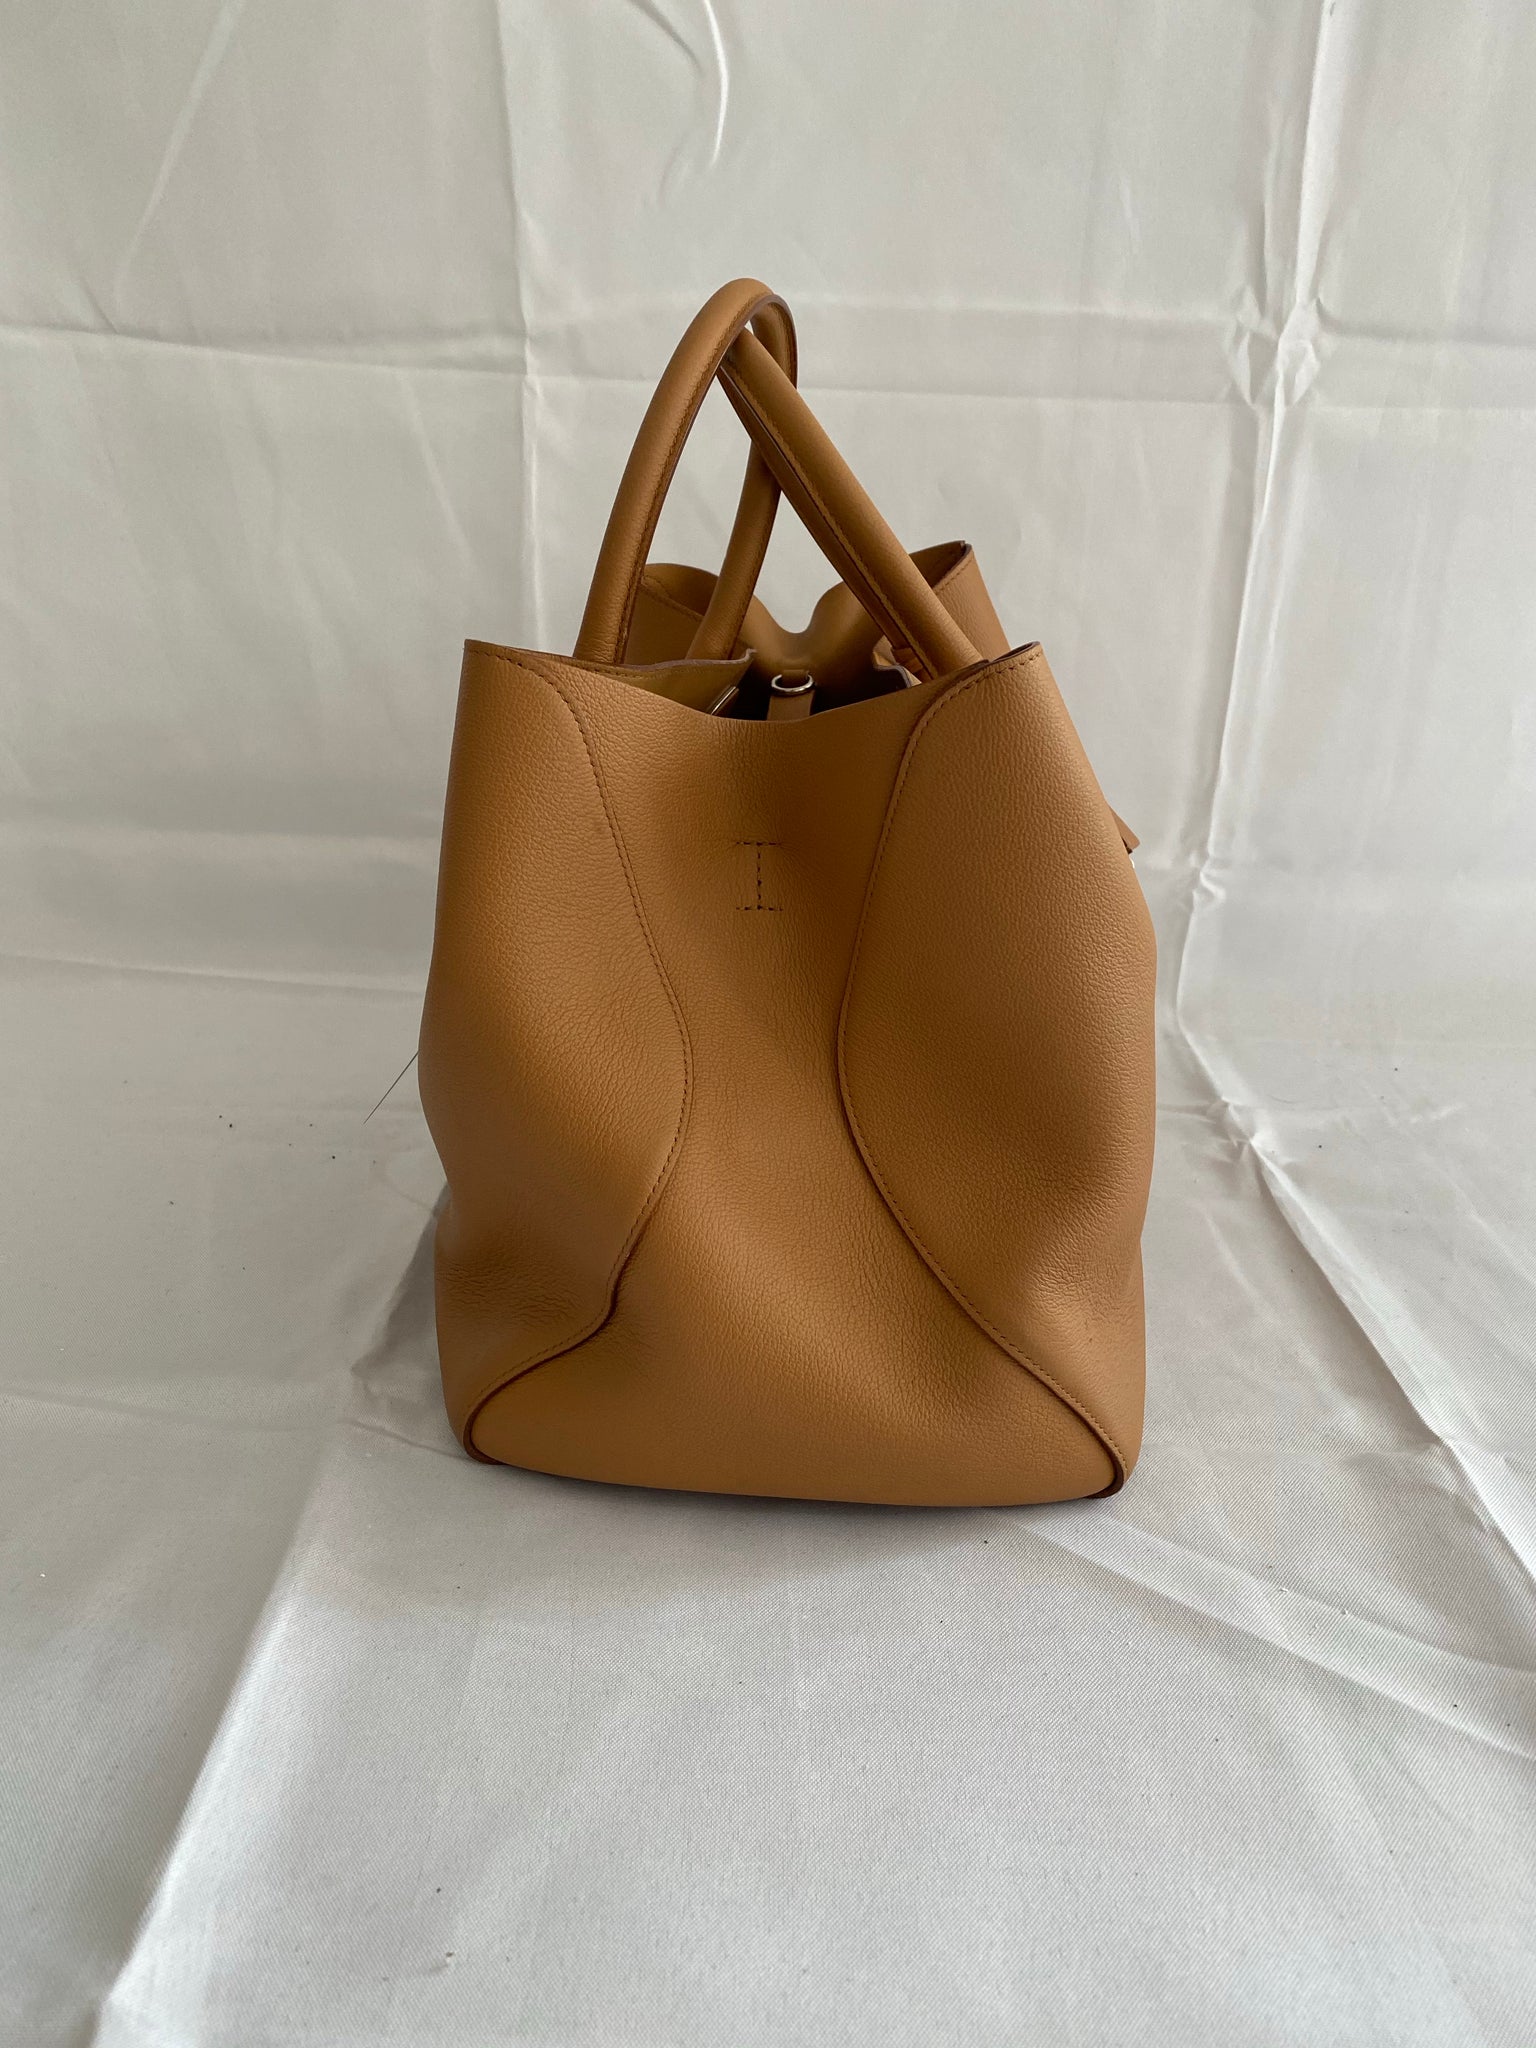 Christian Dior Bag Open BAR Large Amaranth Pristine  eBay